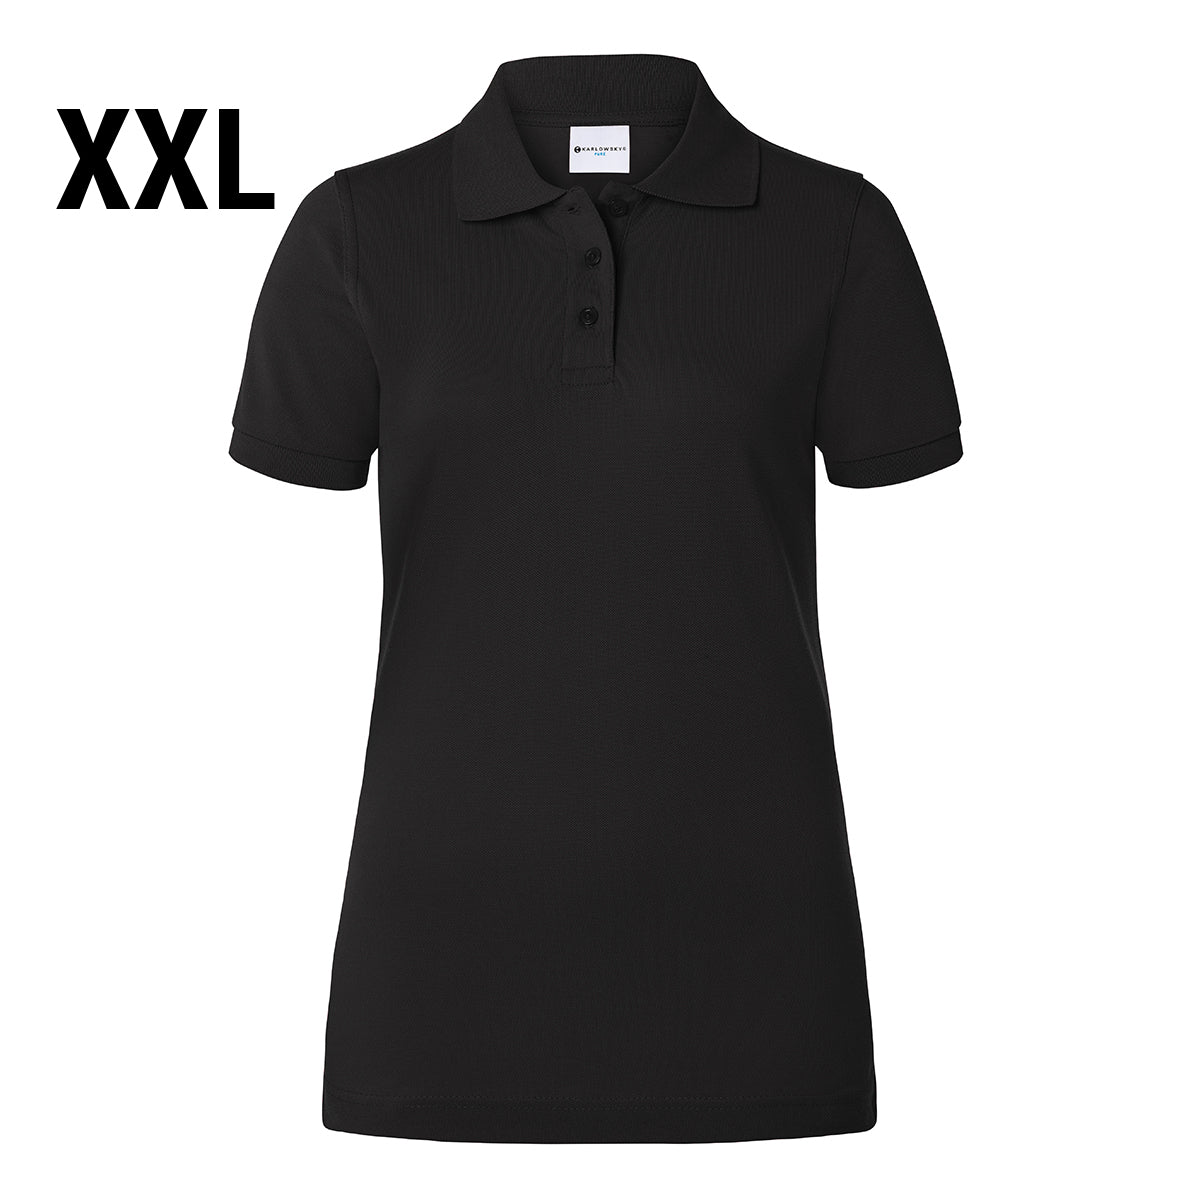 (6 stk) Karlowsky - Workwear Polo Shirt Basic til Damer - Sort - Størrelse: 2XL